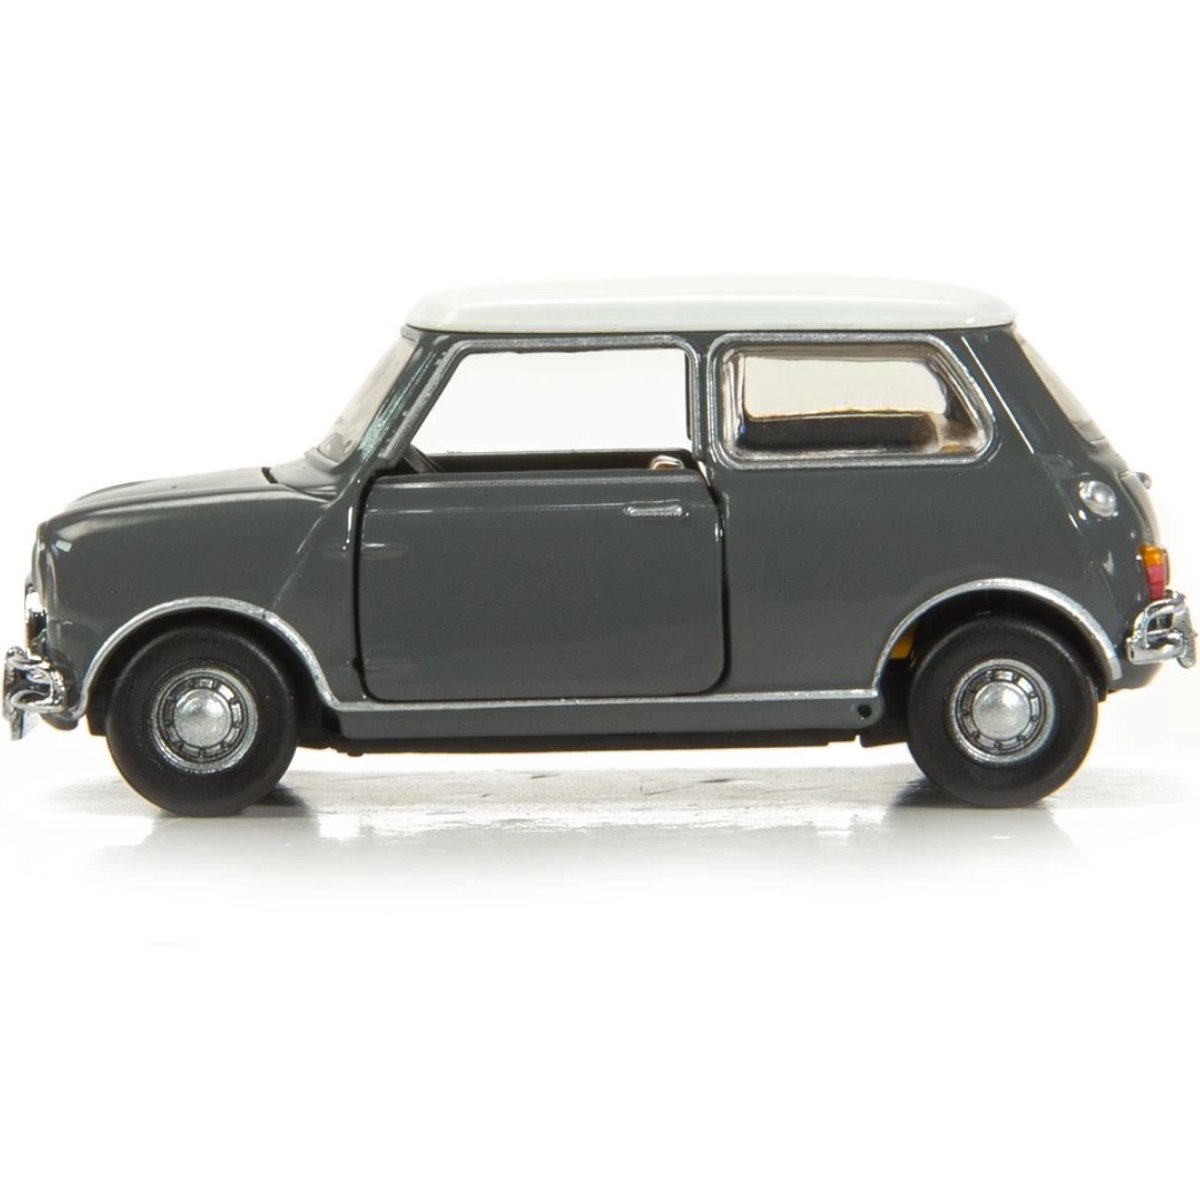 Tiny Models Mini Cooper MK1 425C (1:50 Scale) - Phillips Hobbies